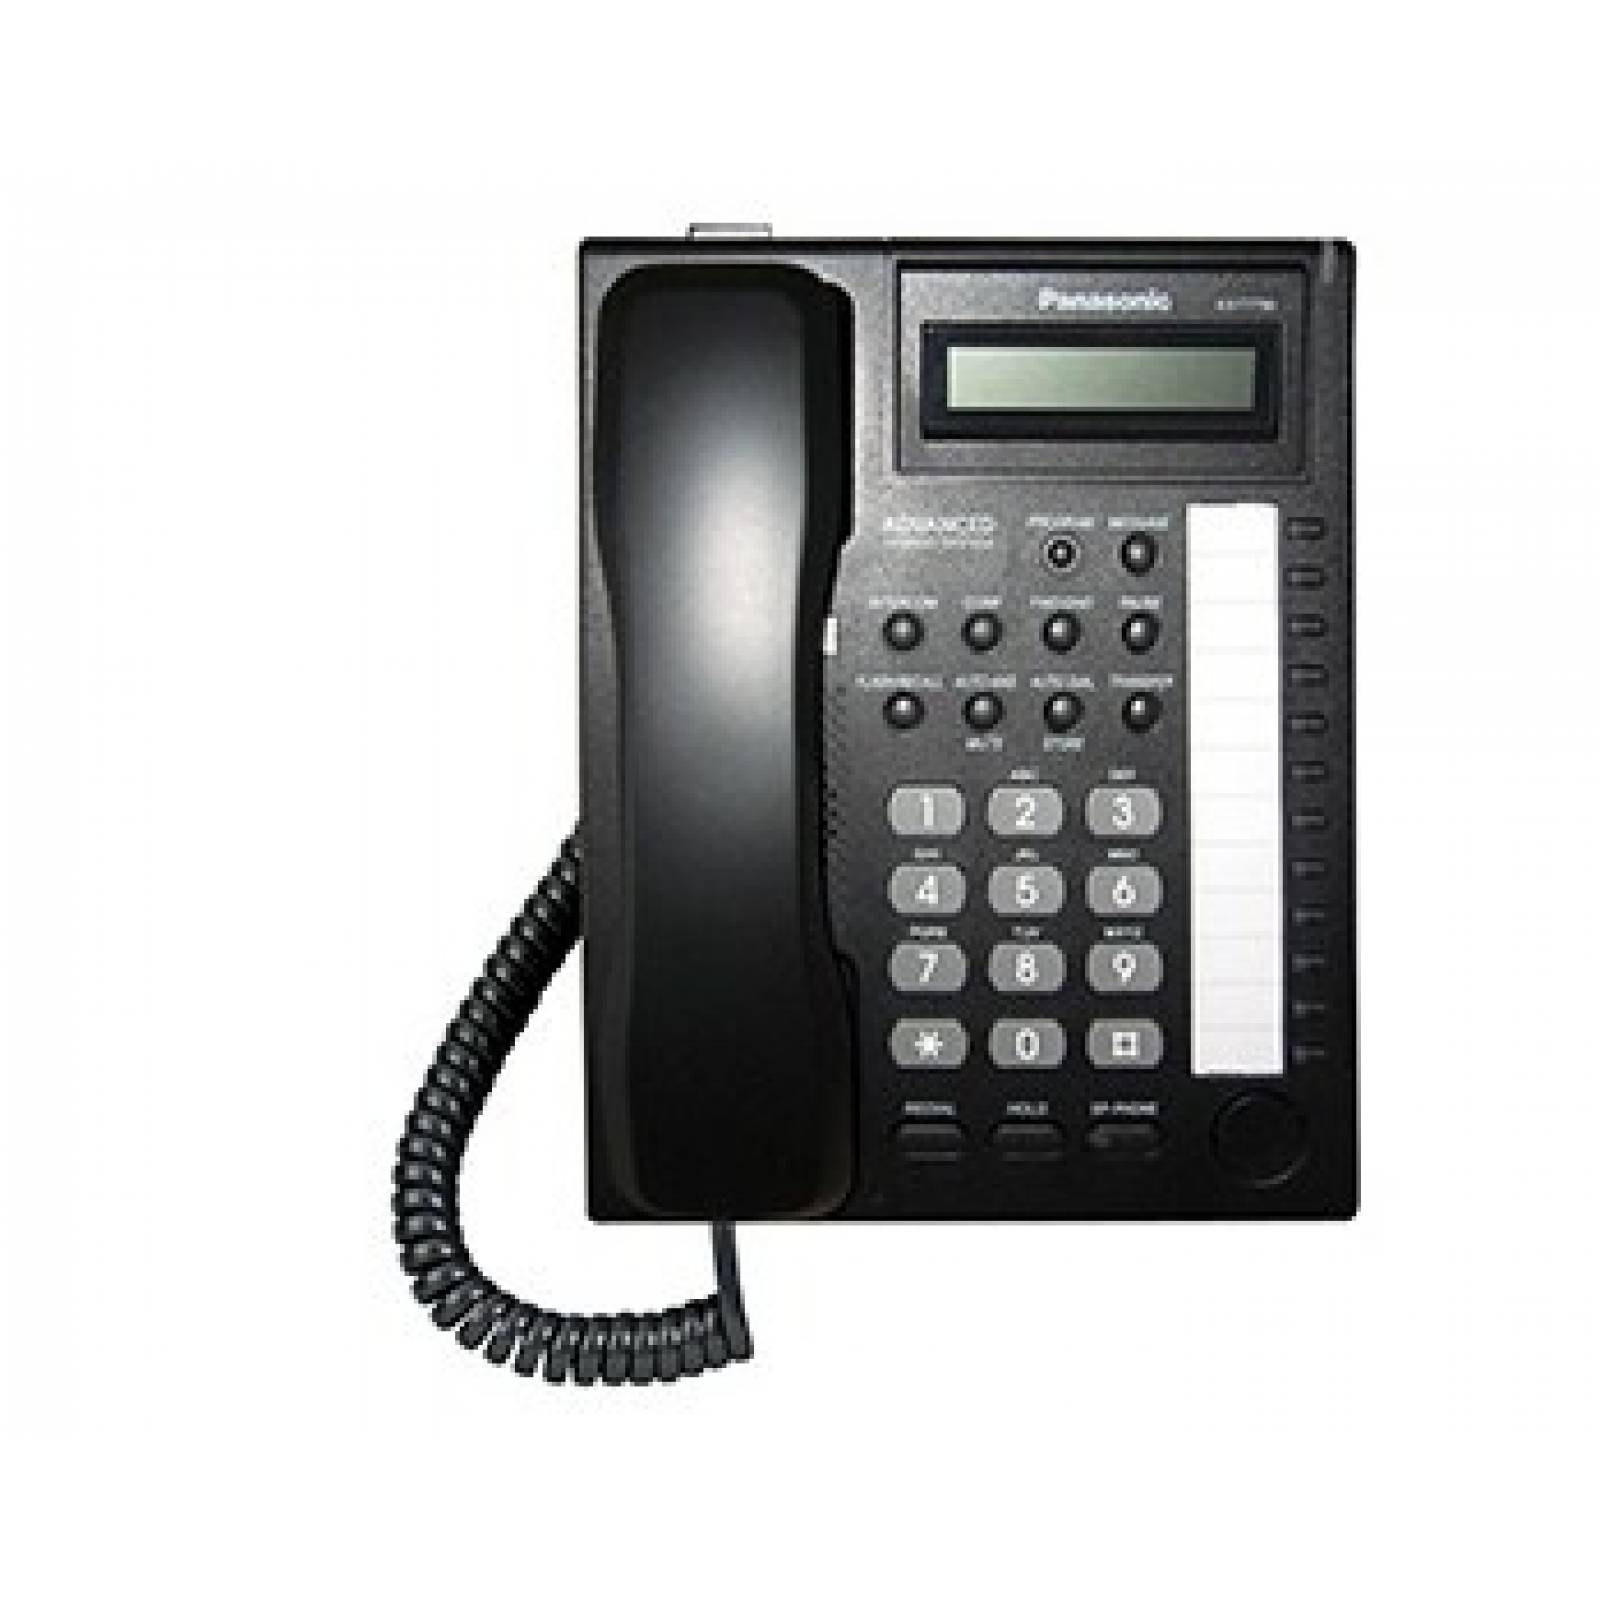 Telefono Panasonic Kx-at7730 Hibrido Con Pantalla De 1 Linea